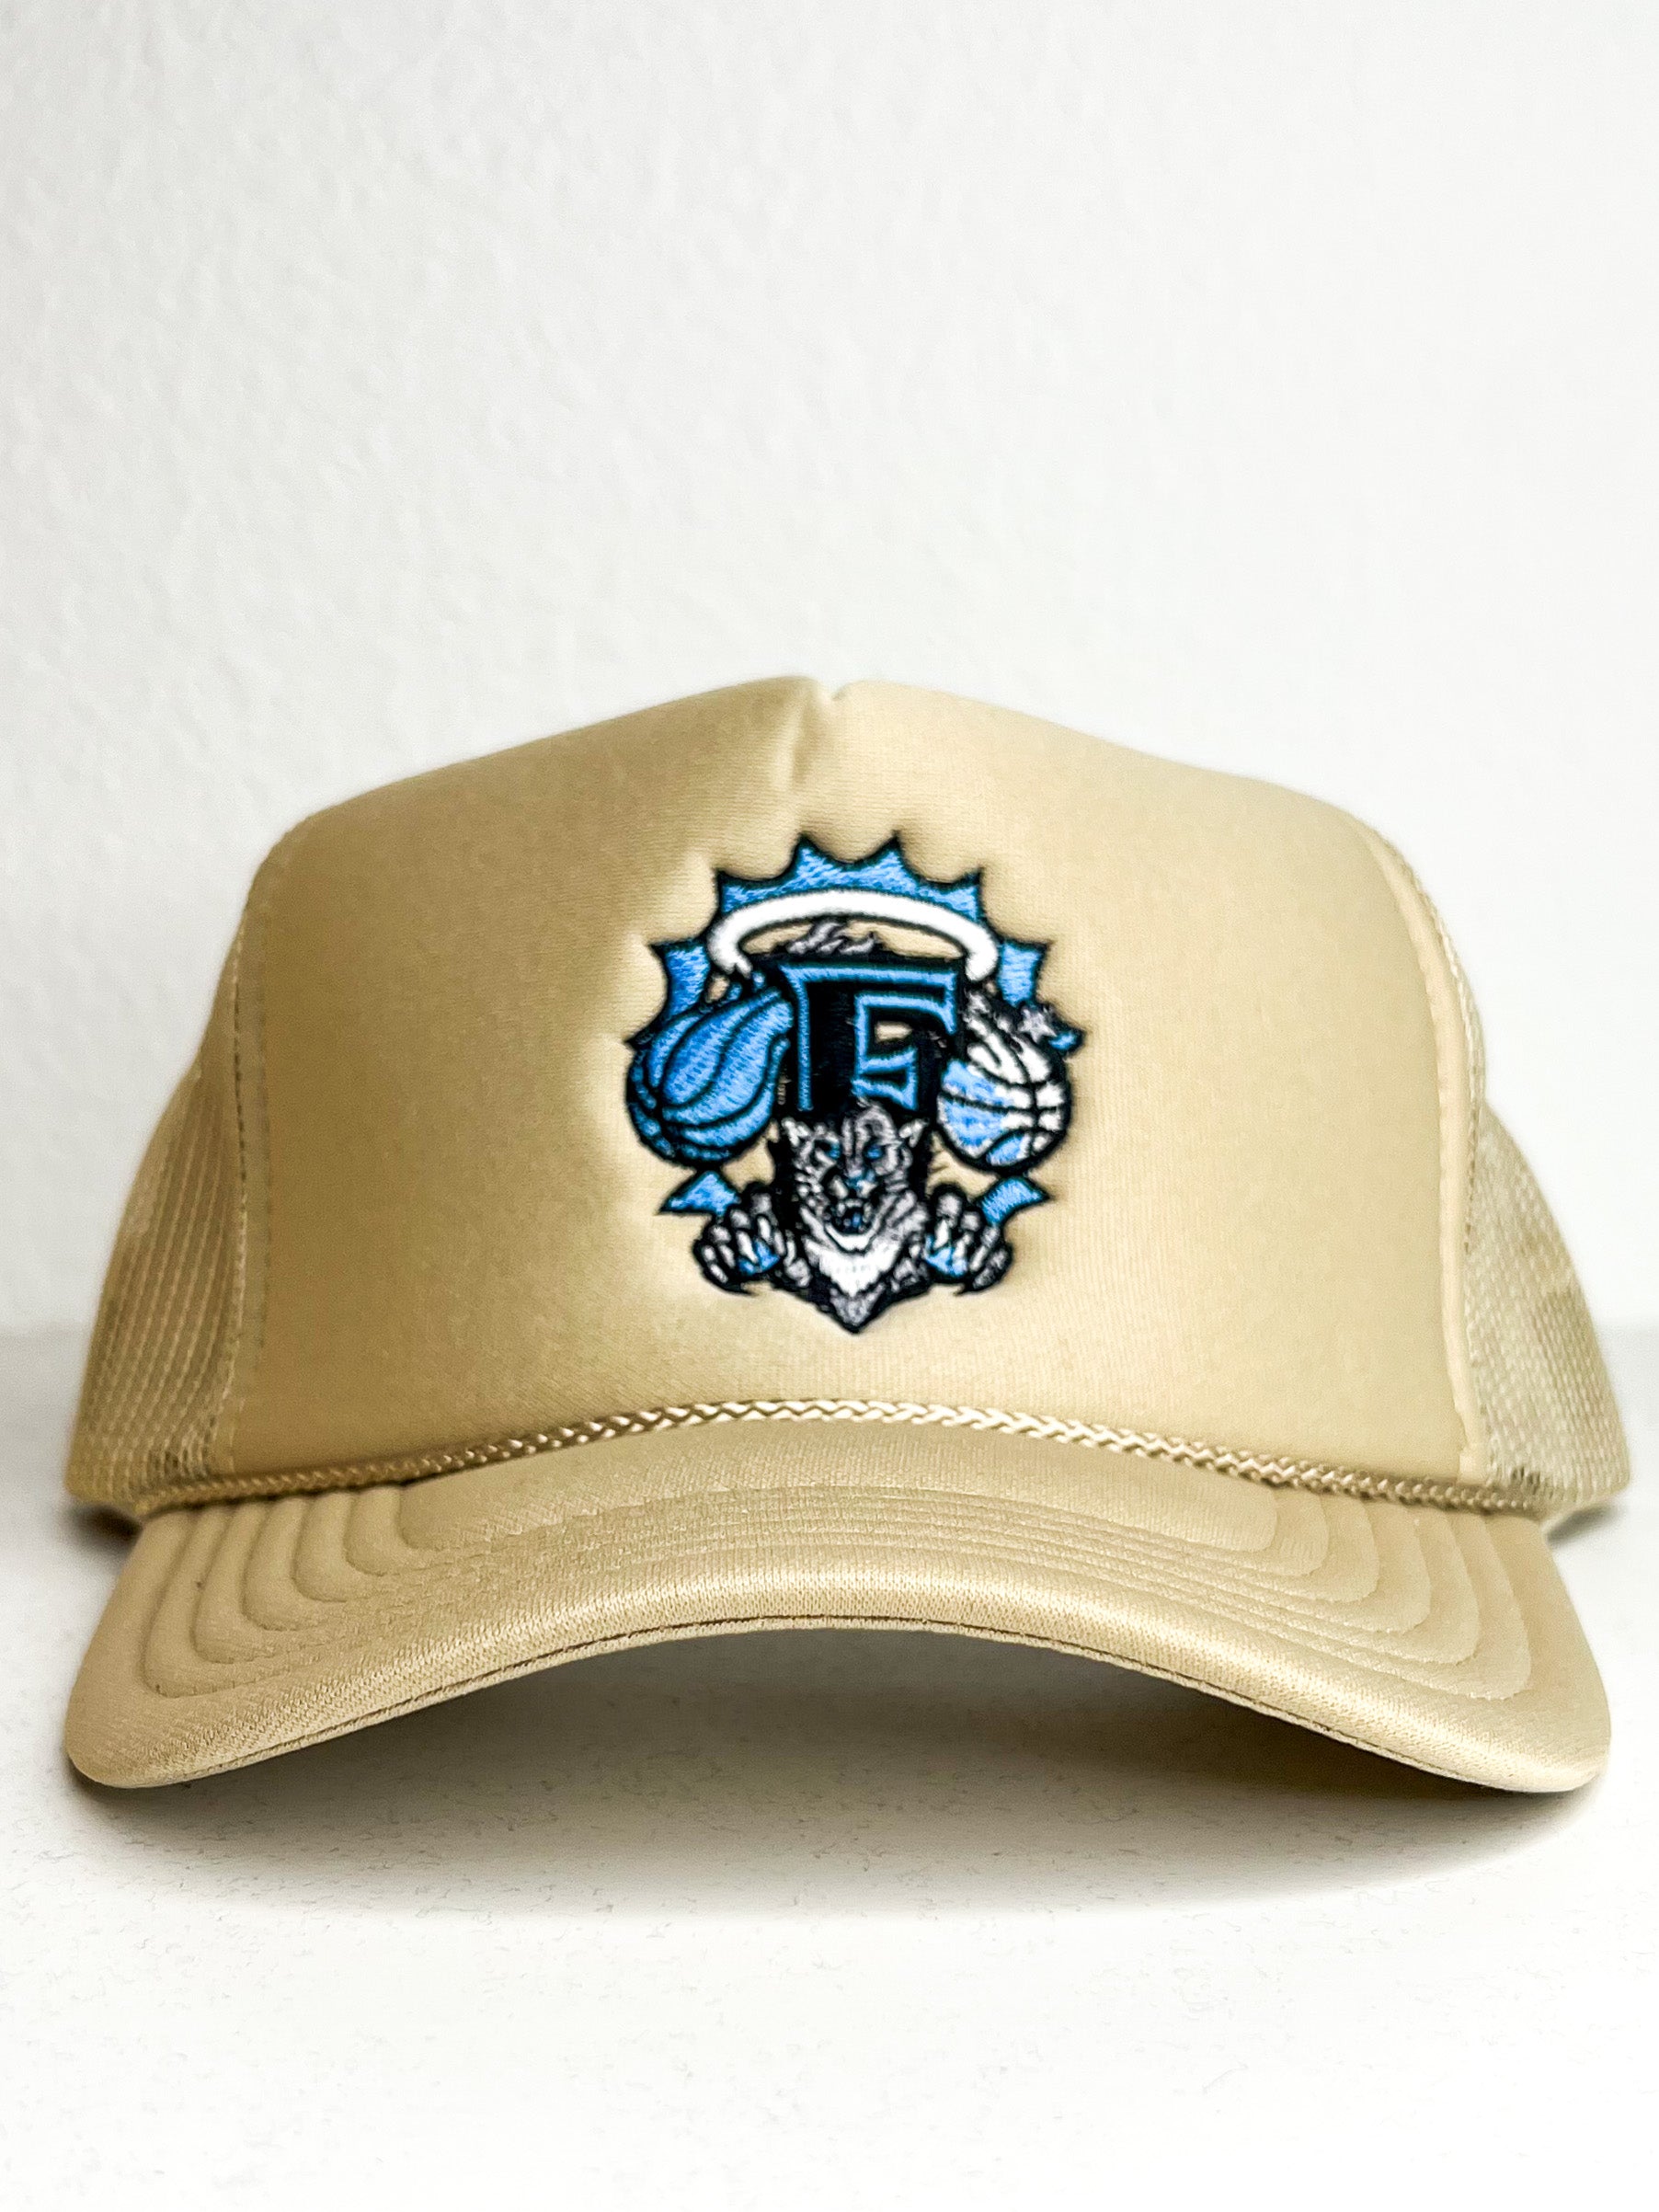 PXL “Florida Legends” Trucker Hat